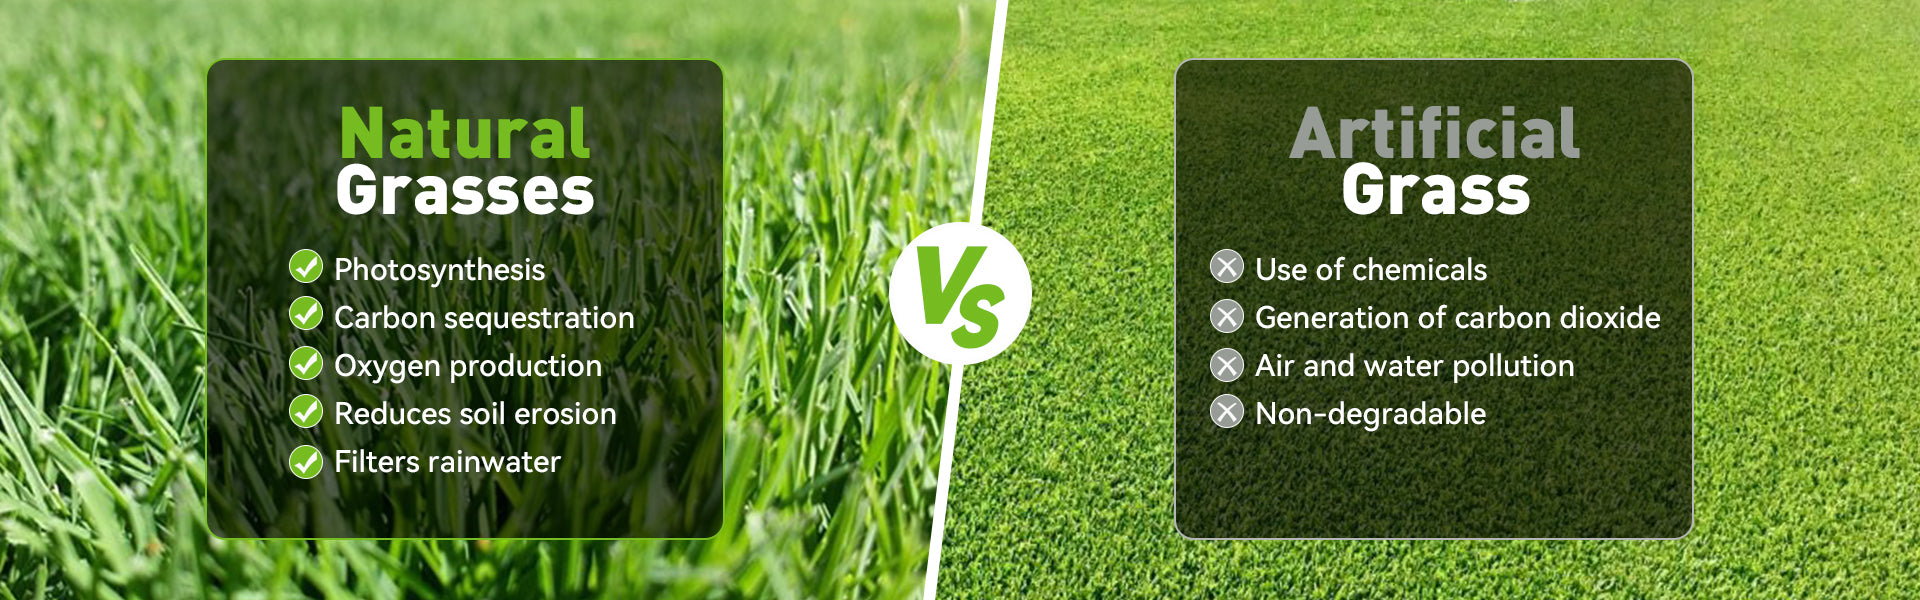 Environmental impact of natural grass vs. artificial grass